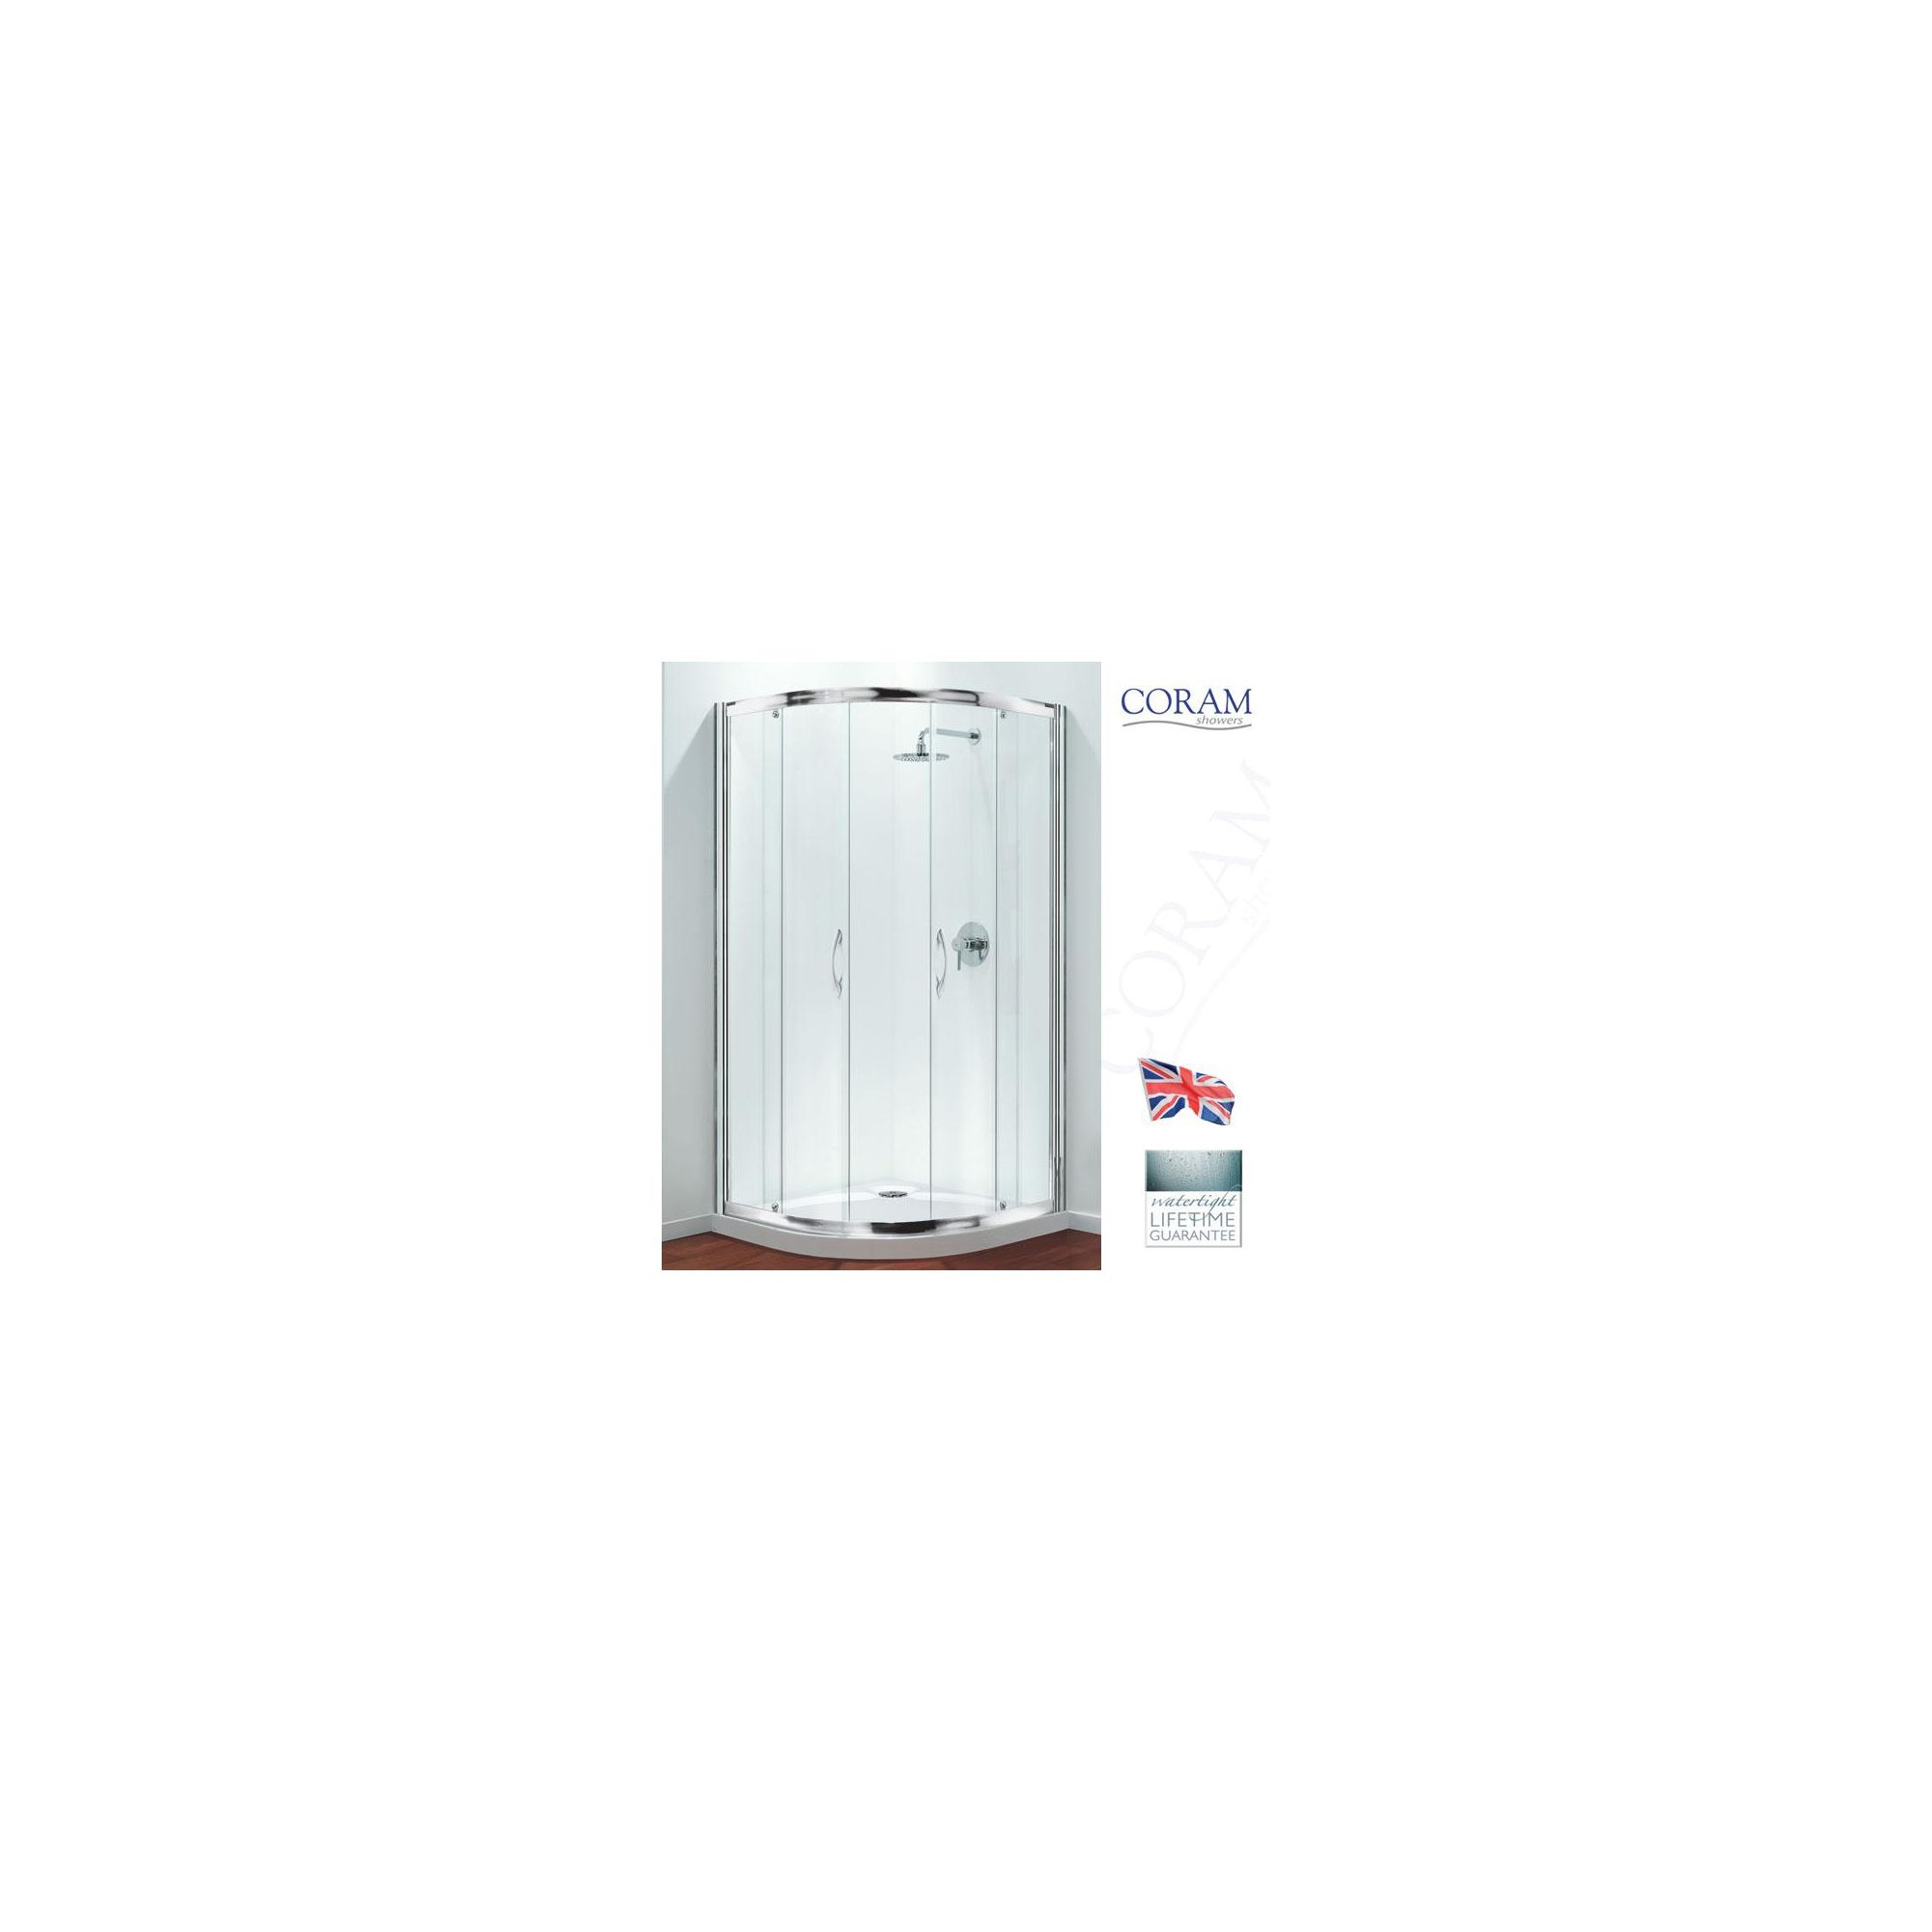 Coram Premier Quadrant Shower Enclosure, 900mm x 900mm, Low Profile Tray, 6mm Glass at Tesco Direct